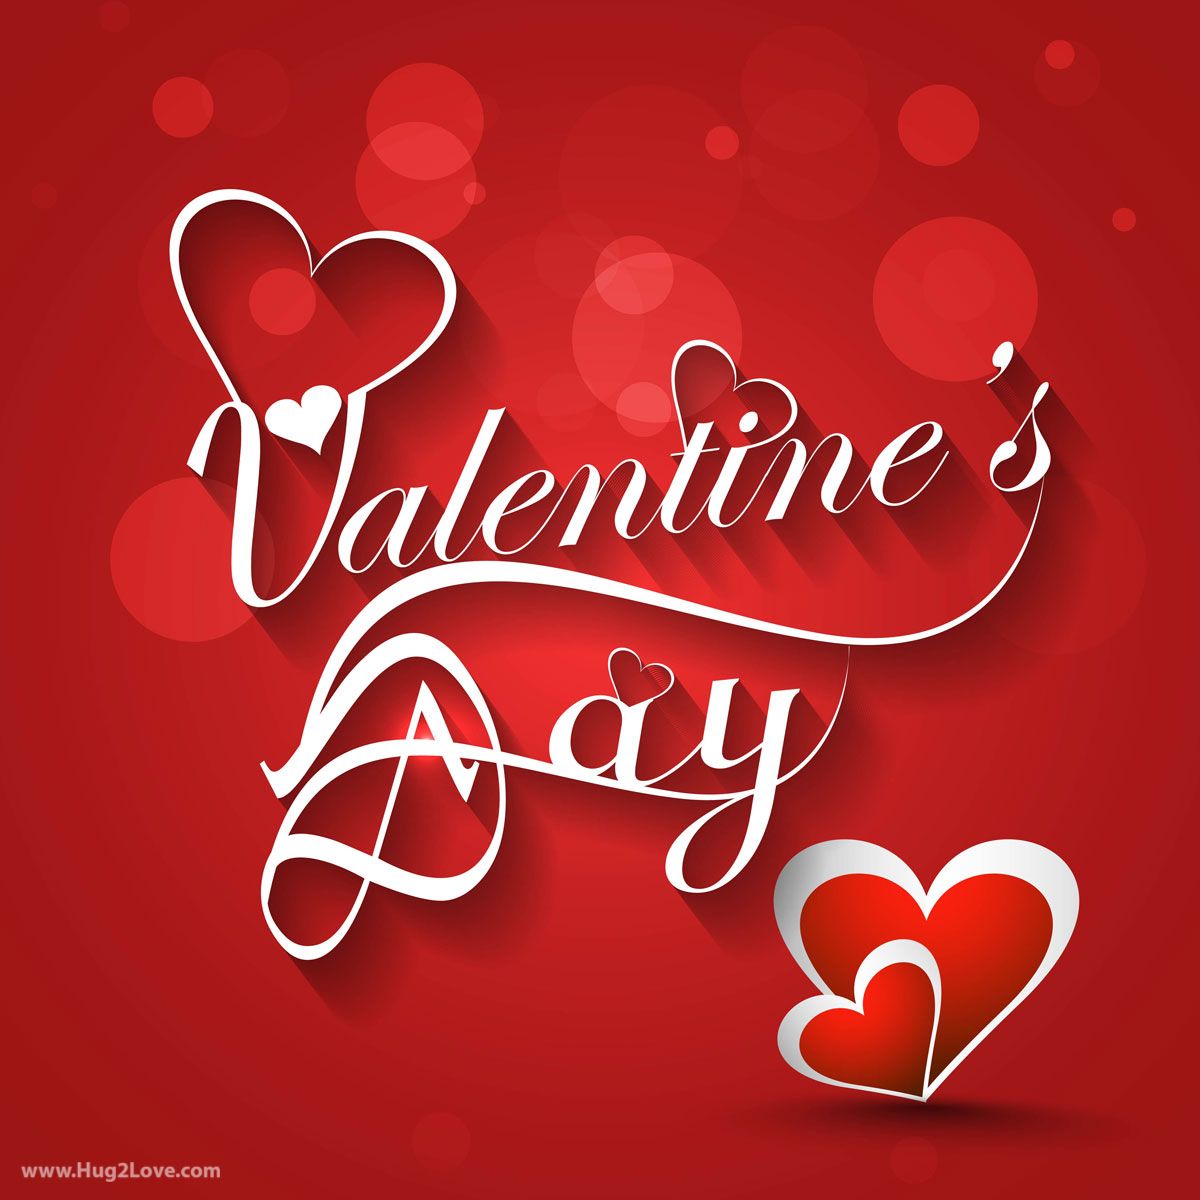 Happy Valentine's Day Image & Wallpaper 2016. Happy valentine day quotes, Happy valentines day image, Happy valentines day